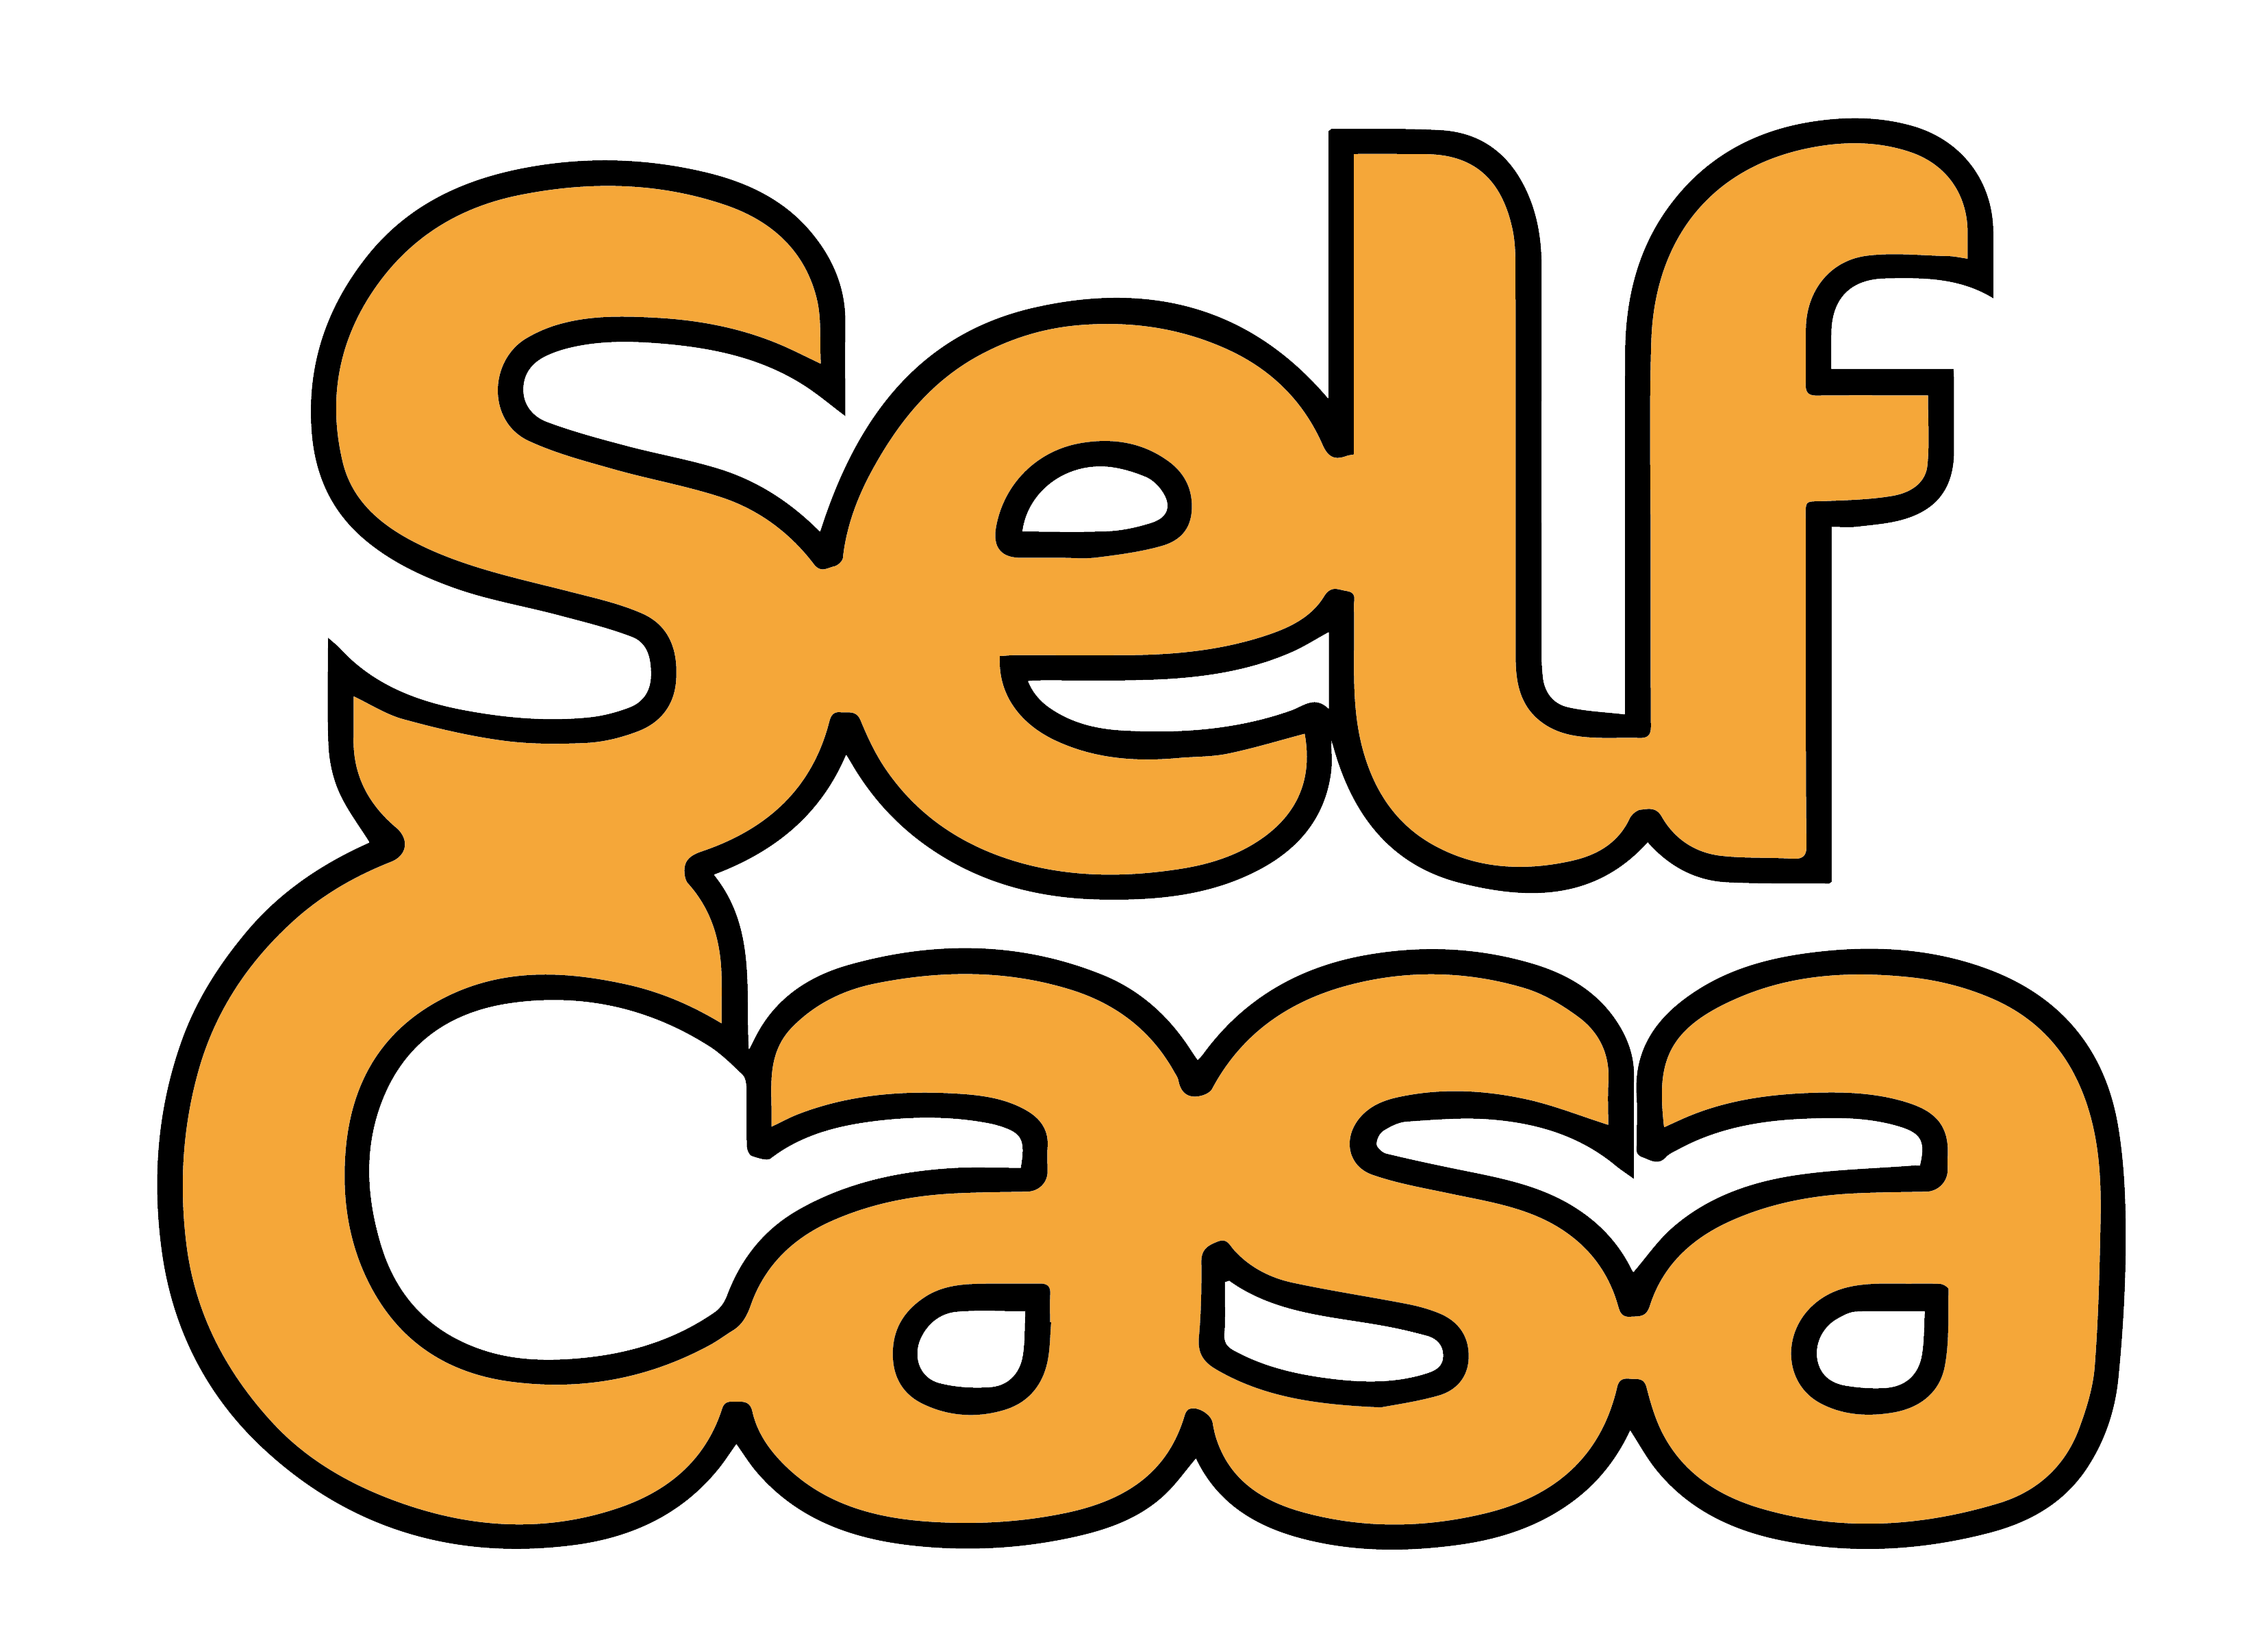 Self Casa